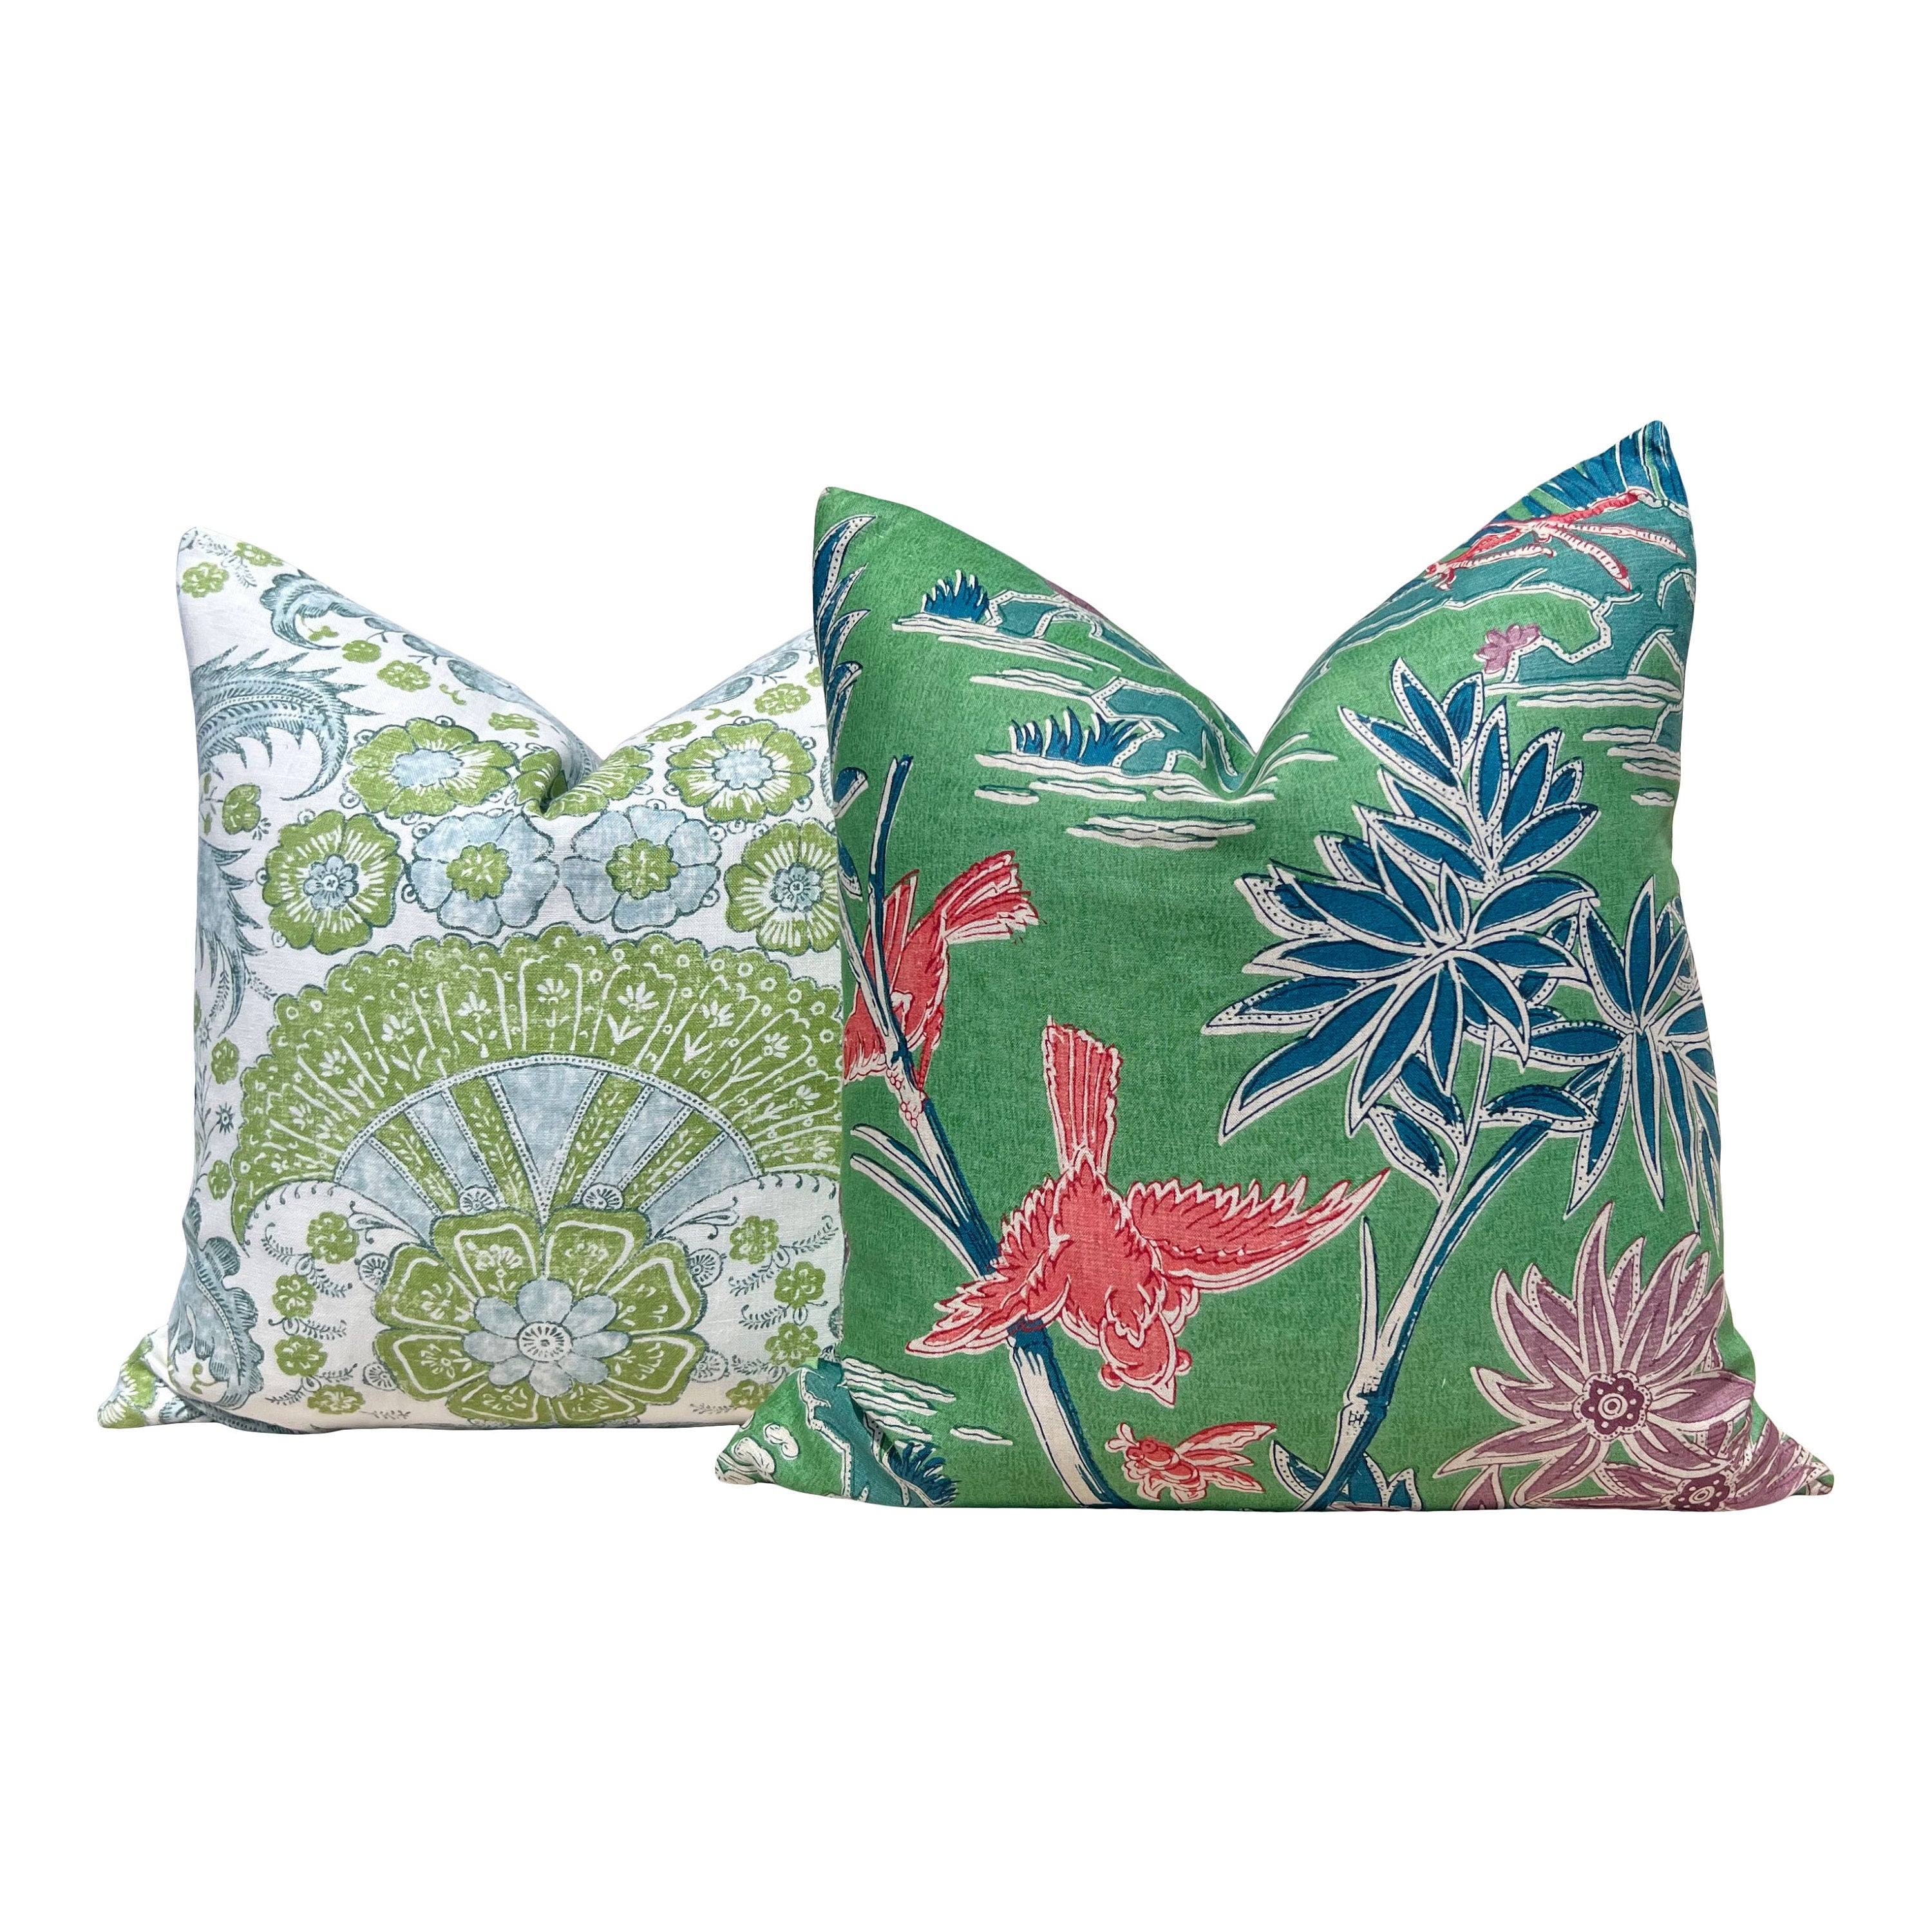 Designer Malai Garden Pillow in Green and Coral. High End Pillows, Chinoiserie Pillows, Green Lumbar Pillow Covers, Bird Print Pillows